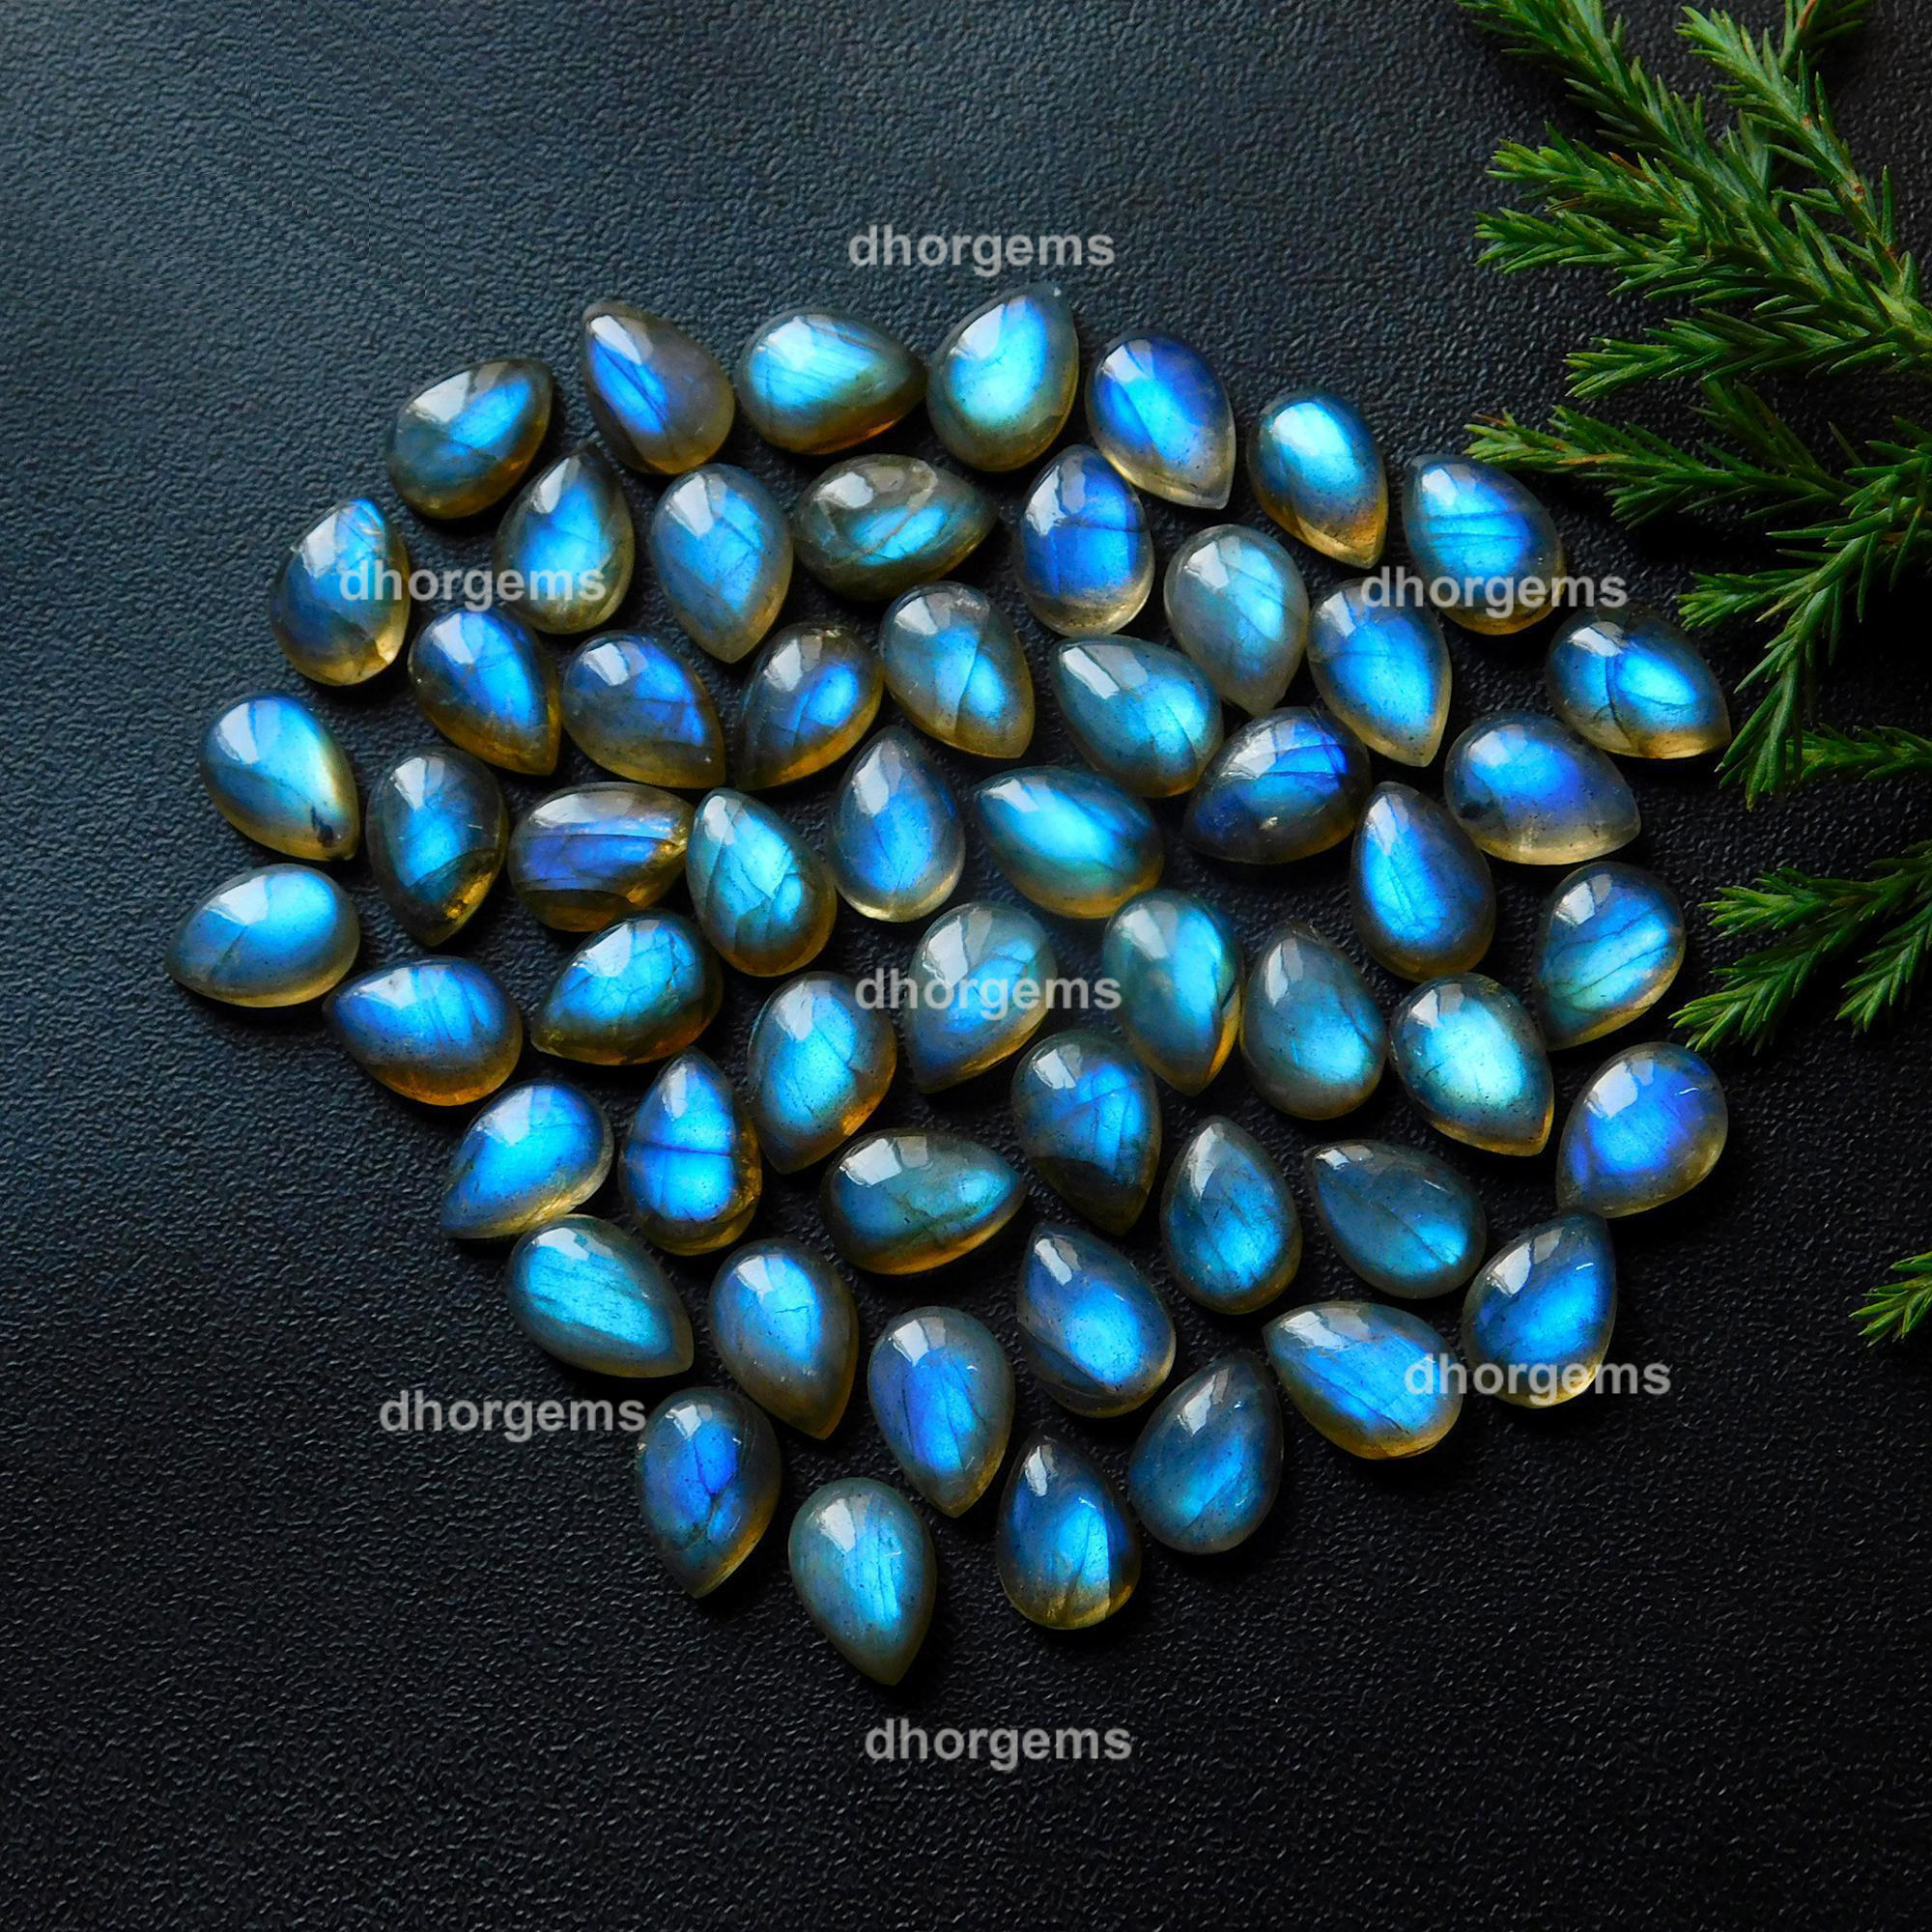 55Pcs 133.35Cts Natural Blue Fire Labradorite Loose Cabochon Calibrated Pear Shape Gemstone Lot 7x10mm#9277